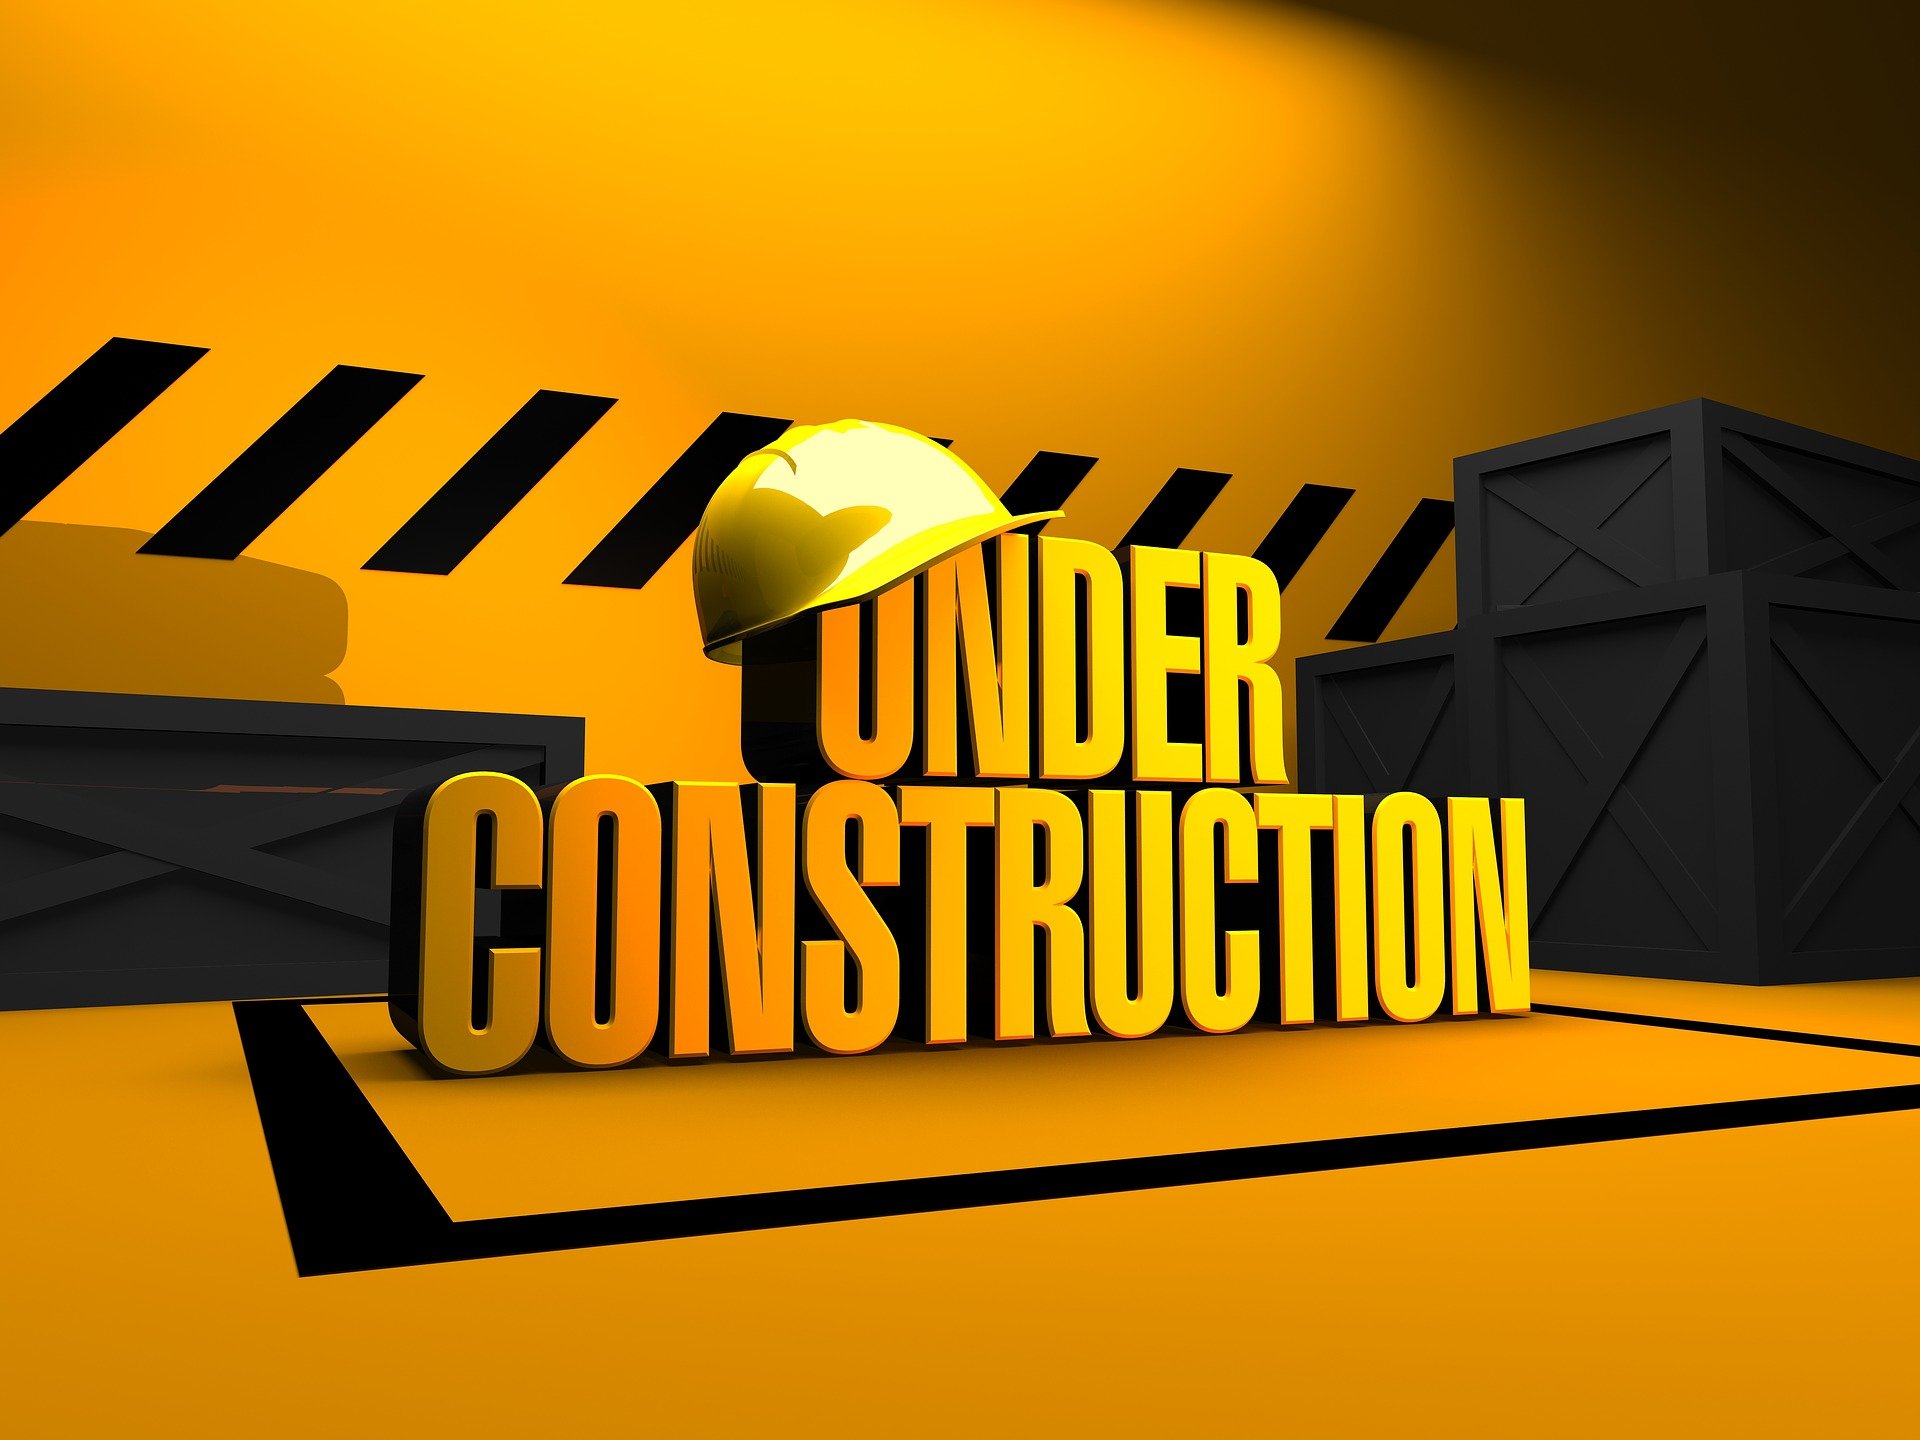 under-construction-gb6023375b_1920